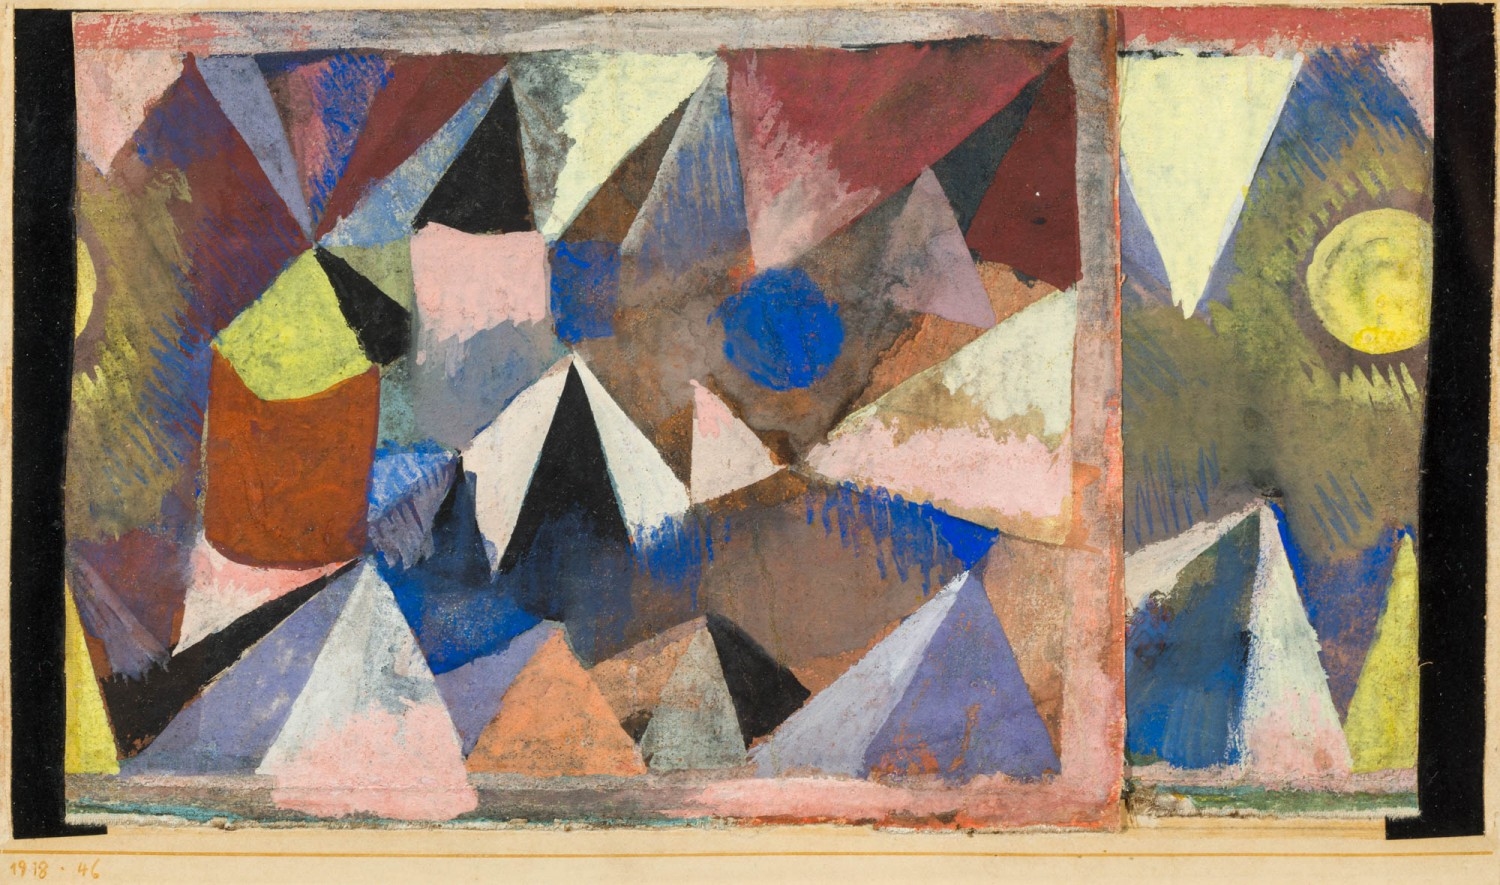 Berglandschaft by Paul Klee, 1918